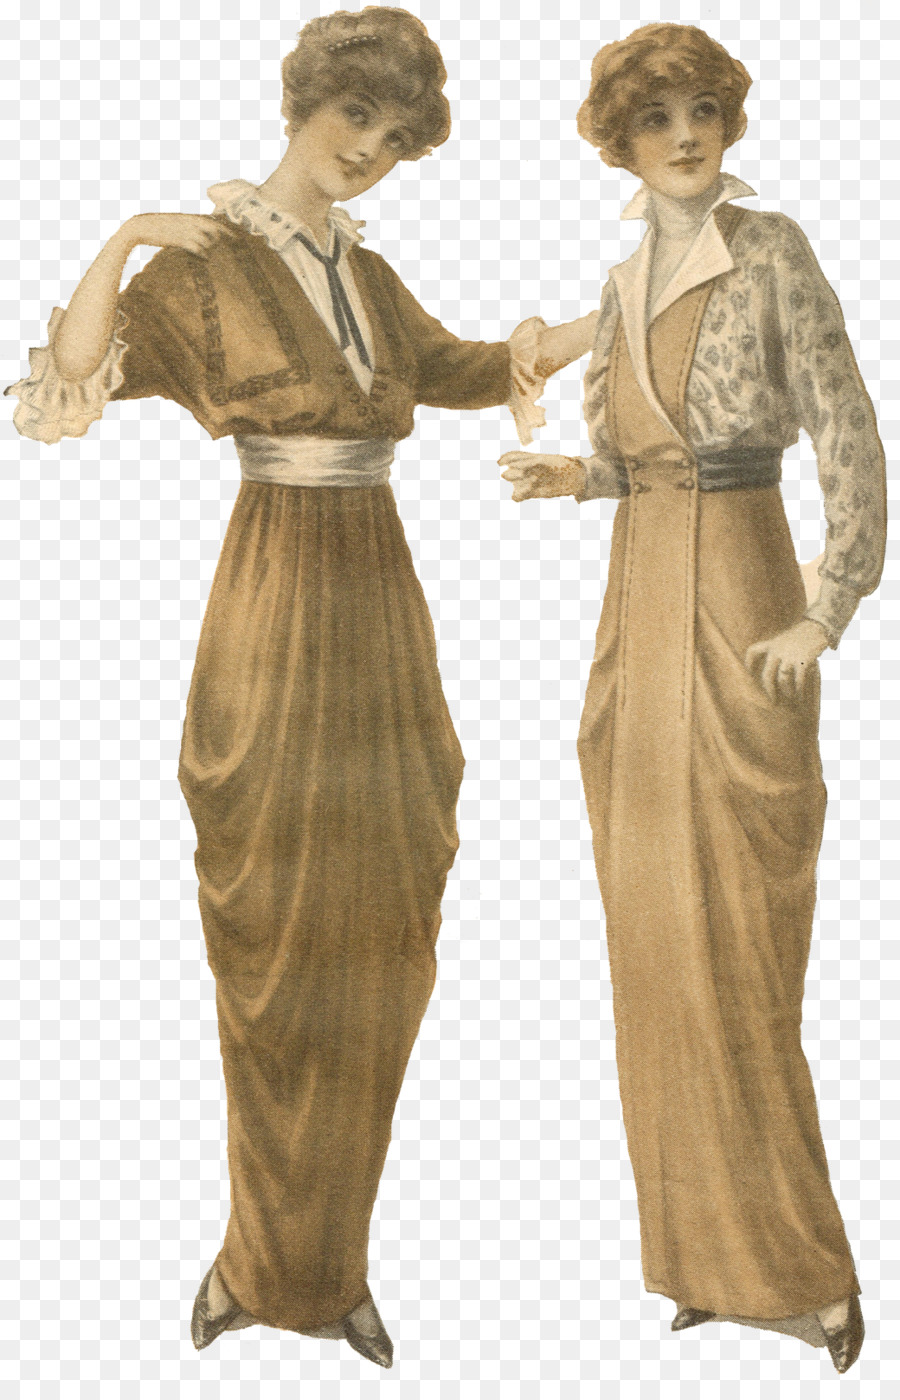 хромая юбка пуаре clipart 1900s in Western fashion clipart.